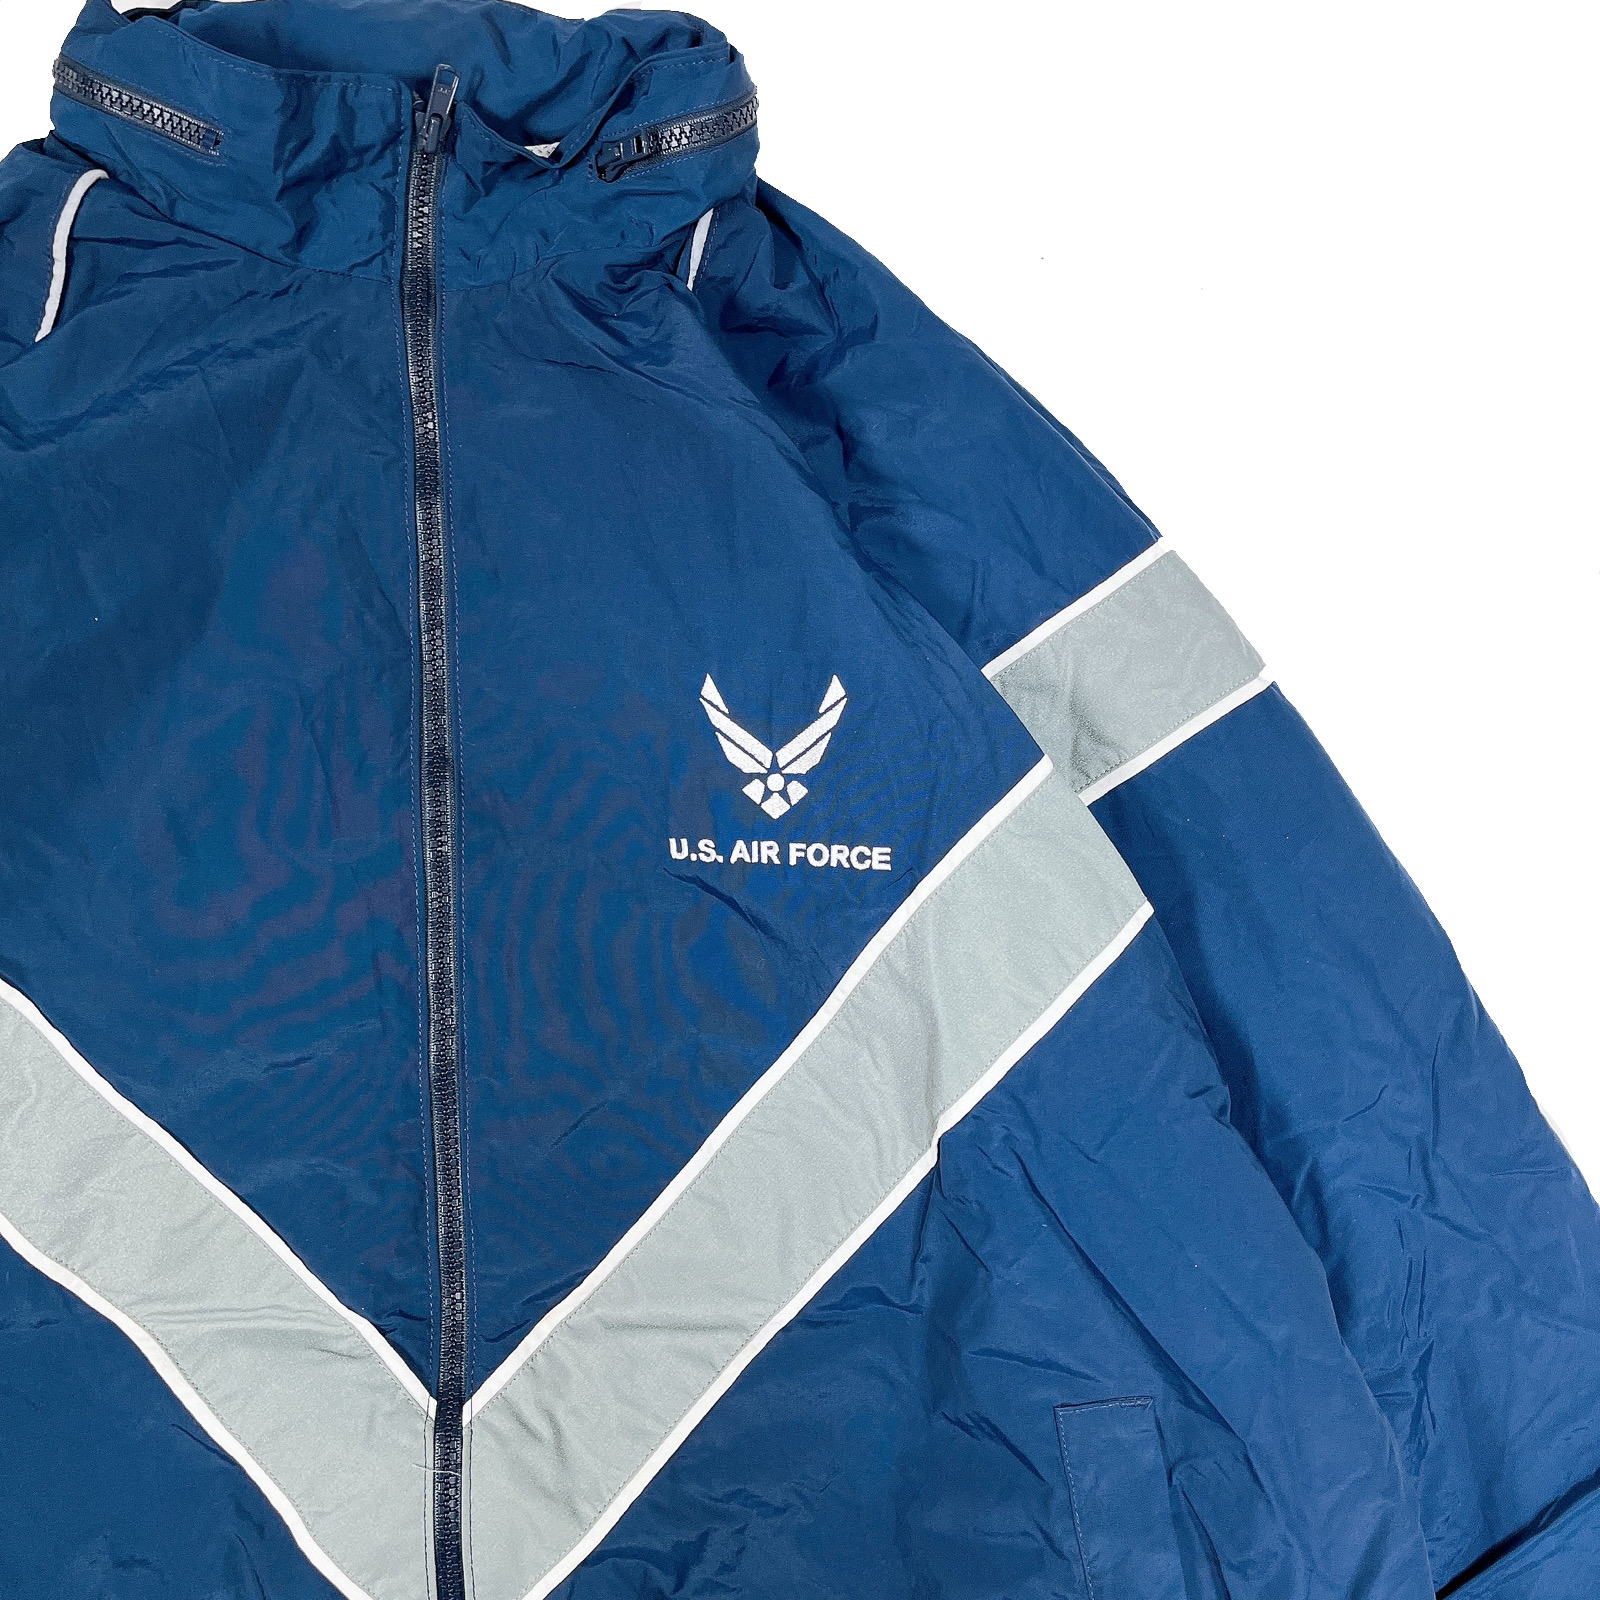 2XLsize U.S AIR FORSE PTU jacket